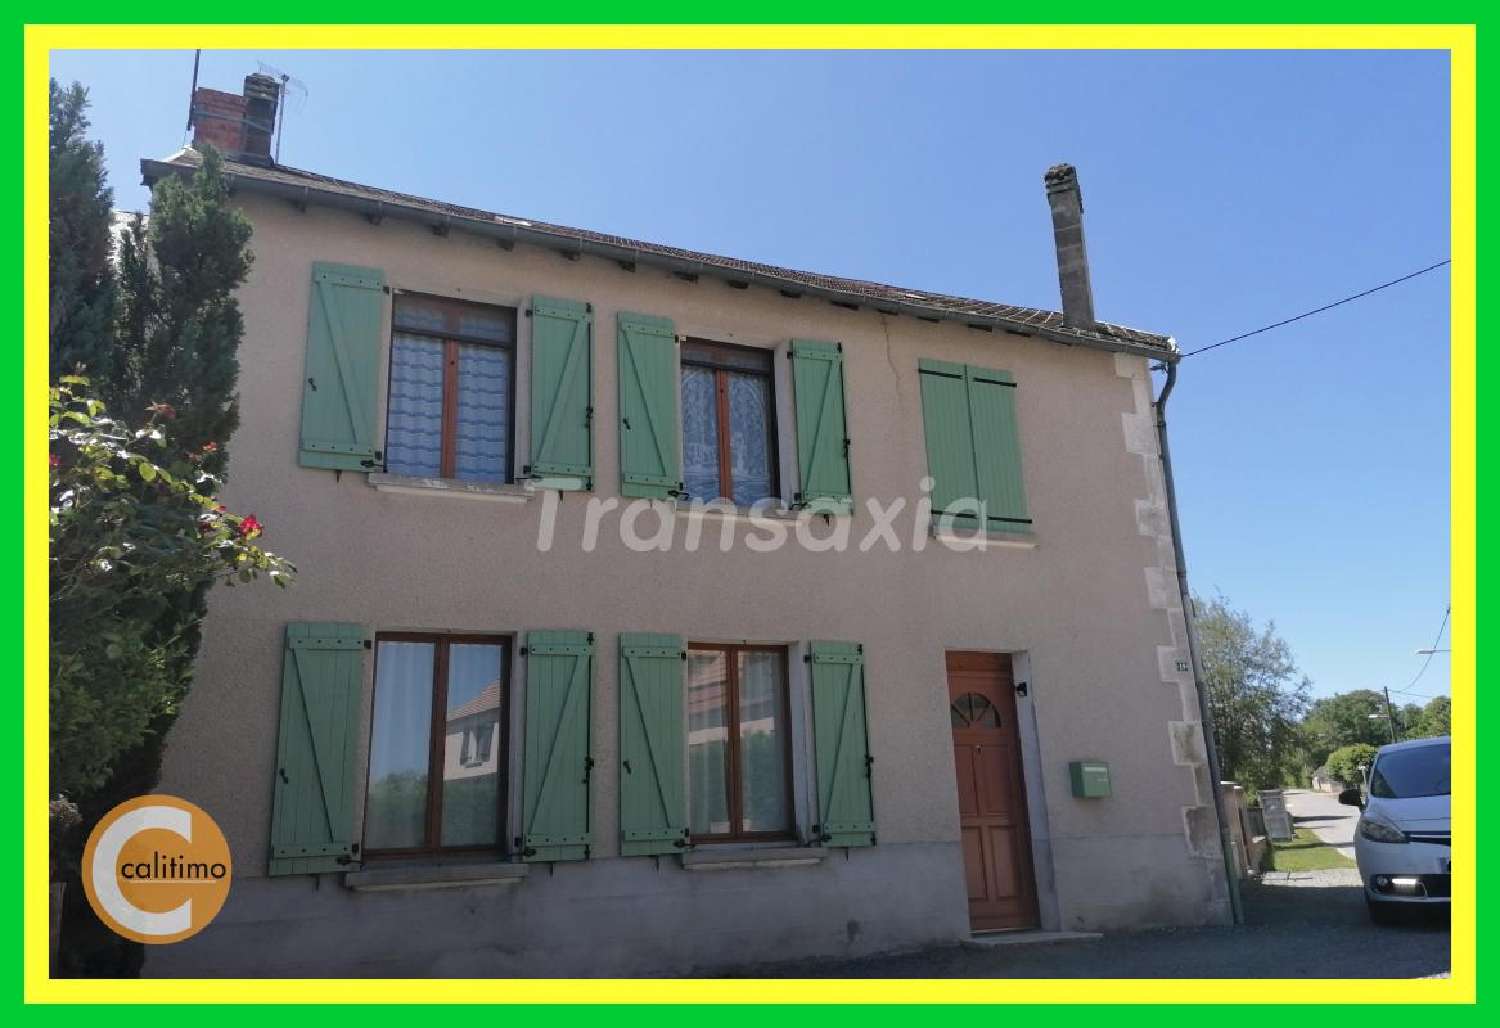  for sale village house Boussac Aveyron 1